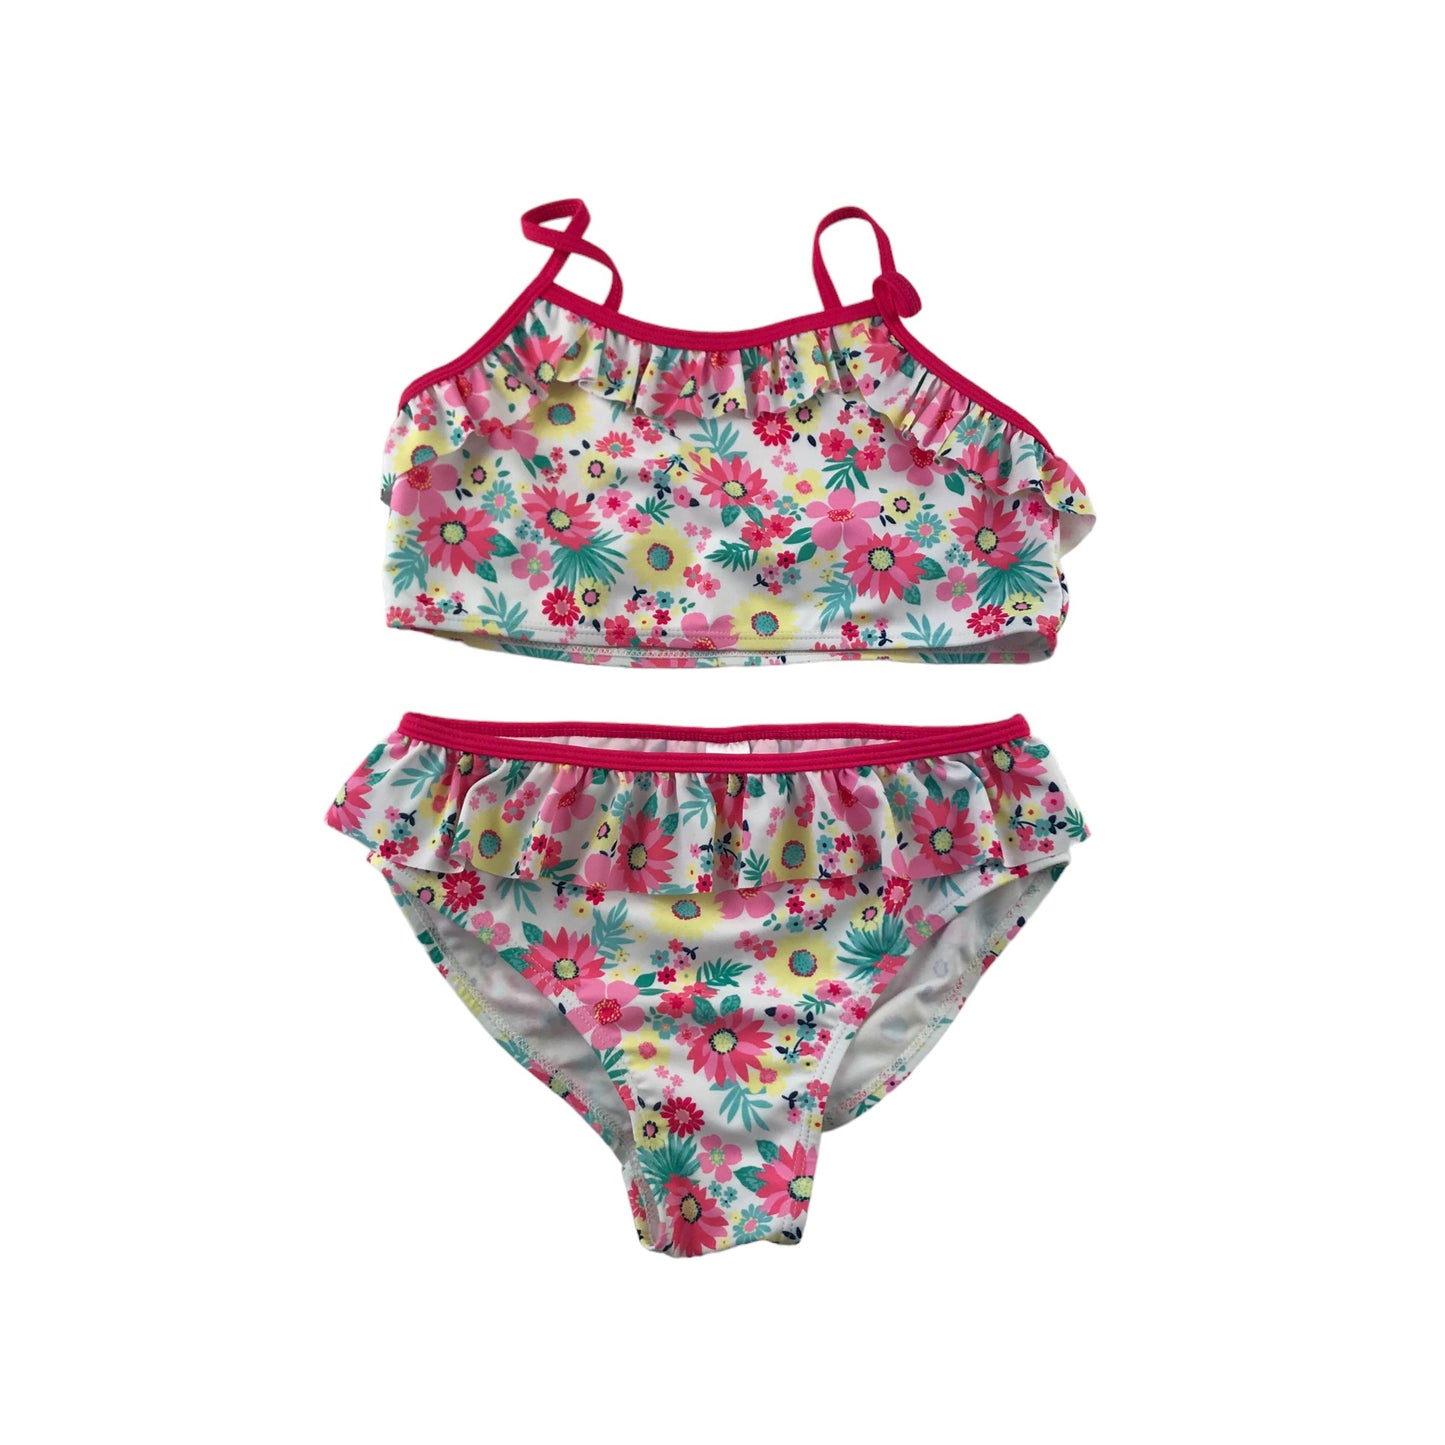 Tu Swimsuit Bikini Set Age 9 White Floral 3-piece Set with Swim top, pants and Bikini Top